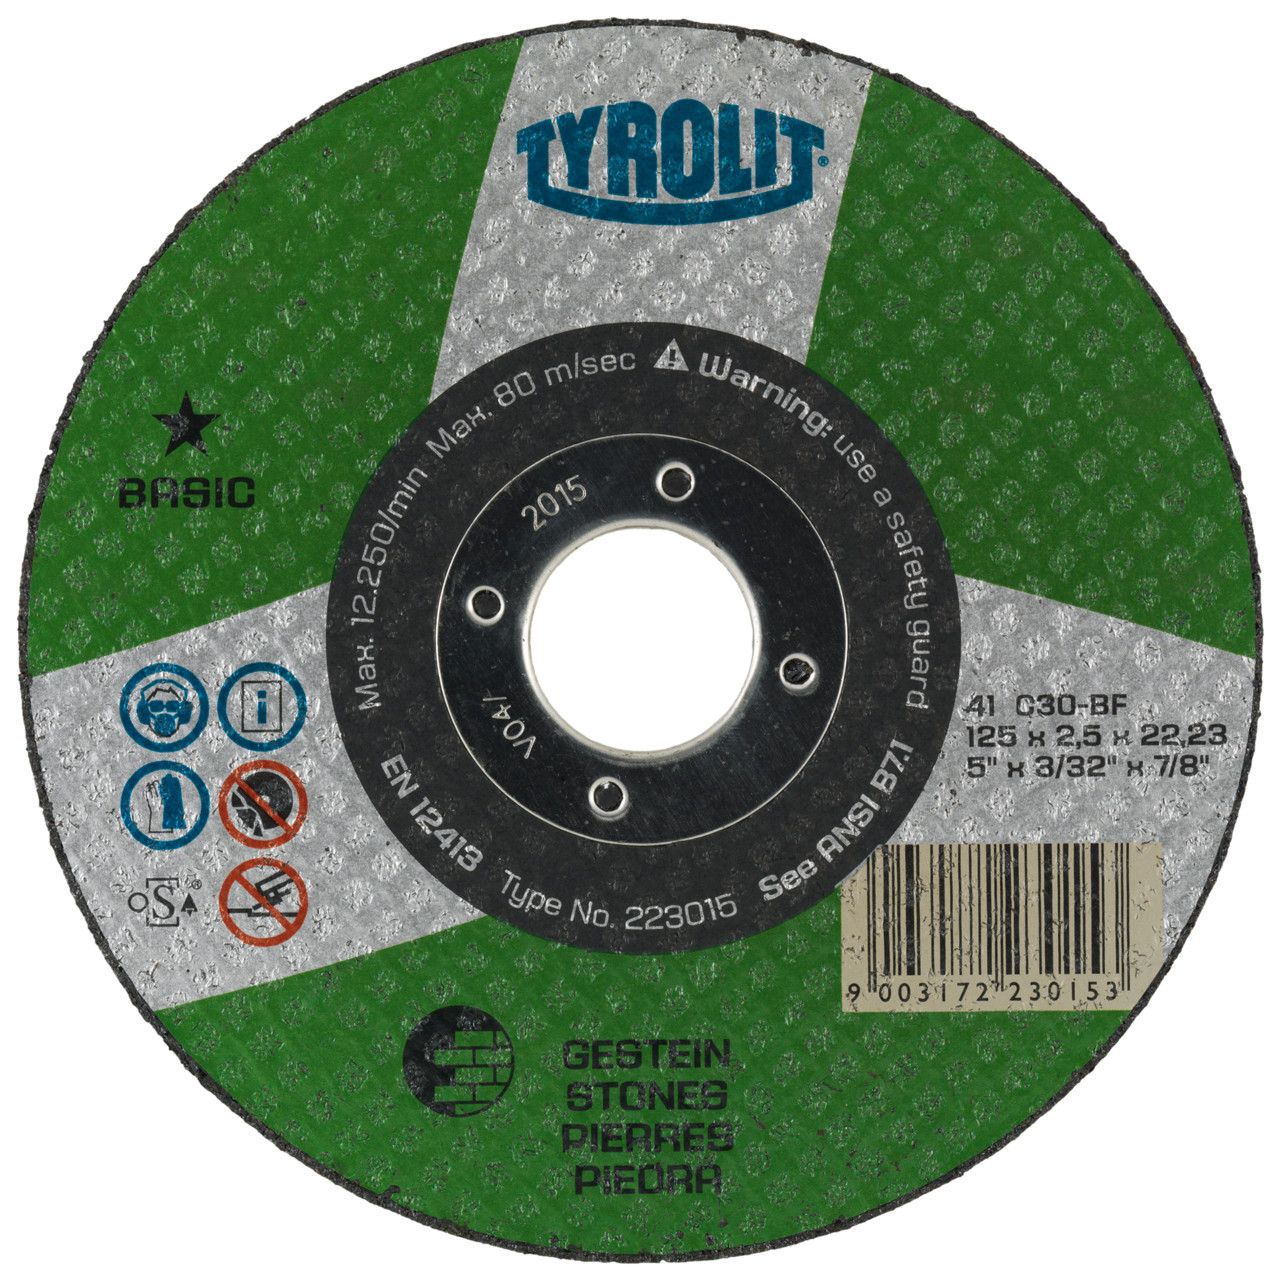 Tyrolit Cutting discs DxDxH 115x2.5x22.23 For stone, shape: 41 - straight version, Art. 223012